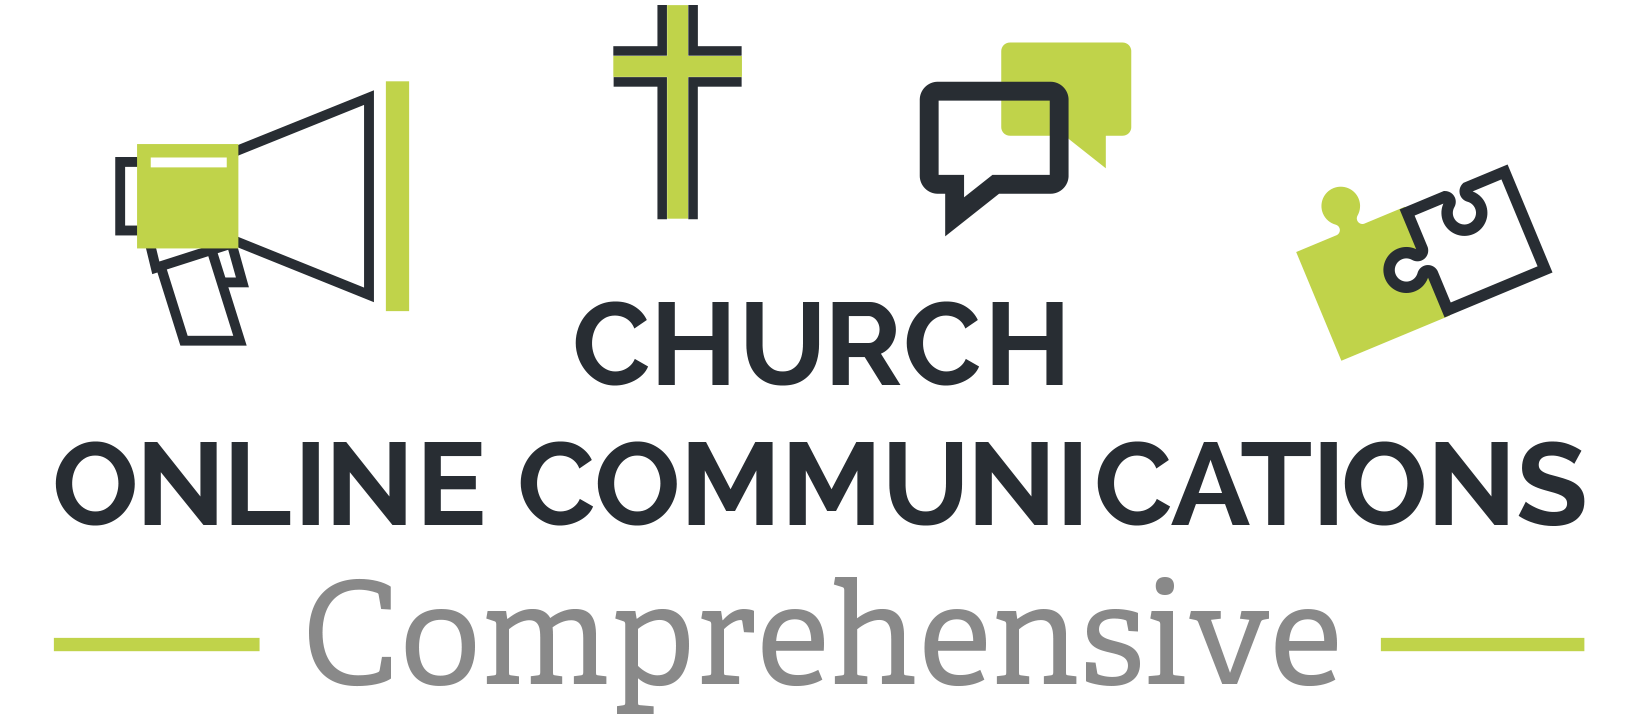 Church Online Communications Comprehensive